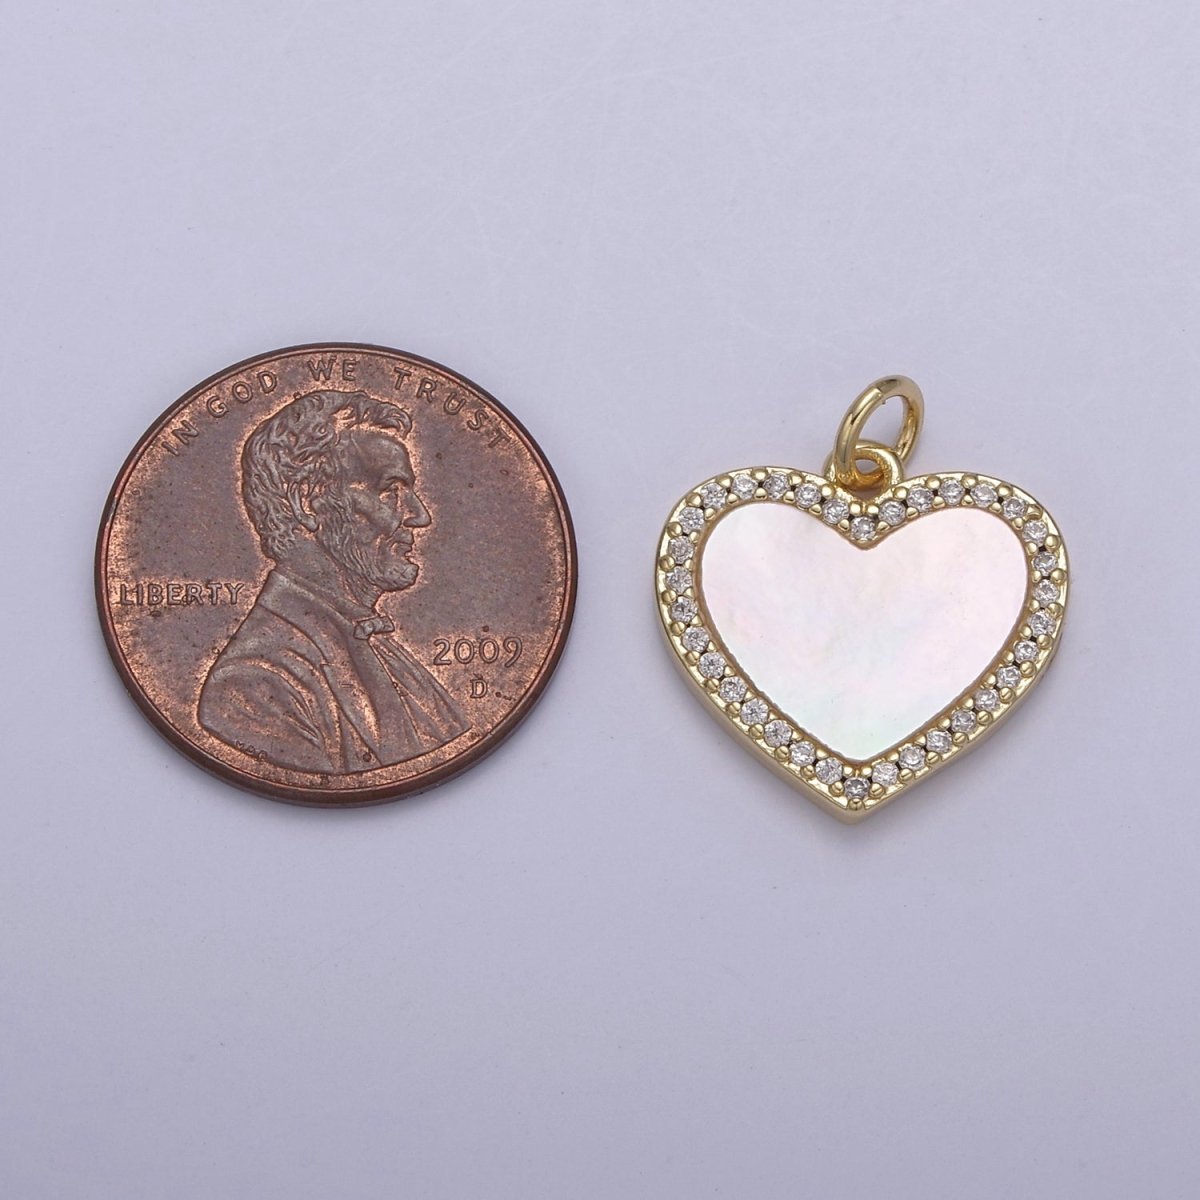 Gemstone Heart Charm, Boho Heart Pendant for Necklace, Turquoise Heart Pendant, Malachite Heart Pendant, Tiger Eye Pearl Abalone Heart Charm for Jewelry Making N-896 - N-900 - DLUXCA